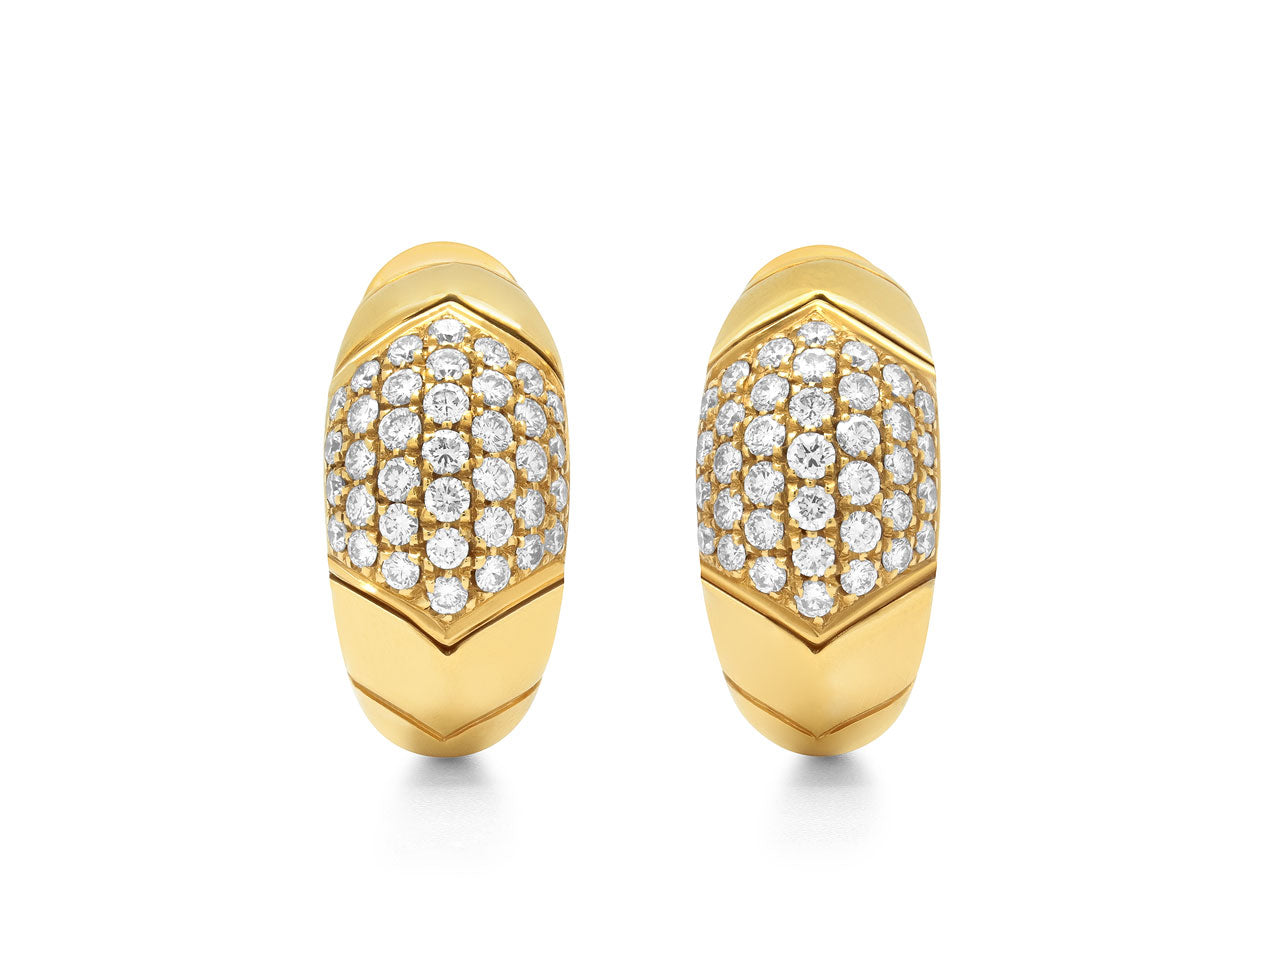 Bulgari 'Tronchetto' Diamond Earrings in 18K Gold